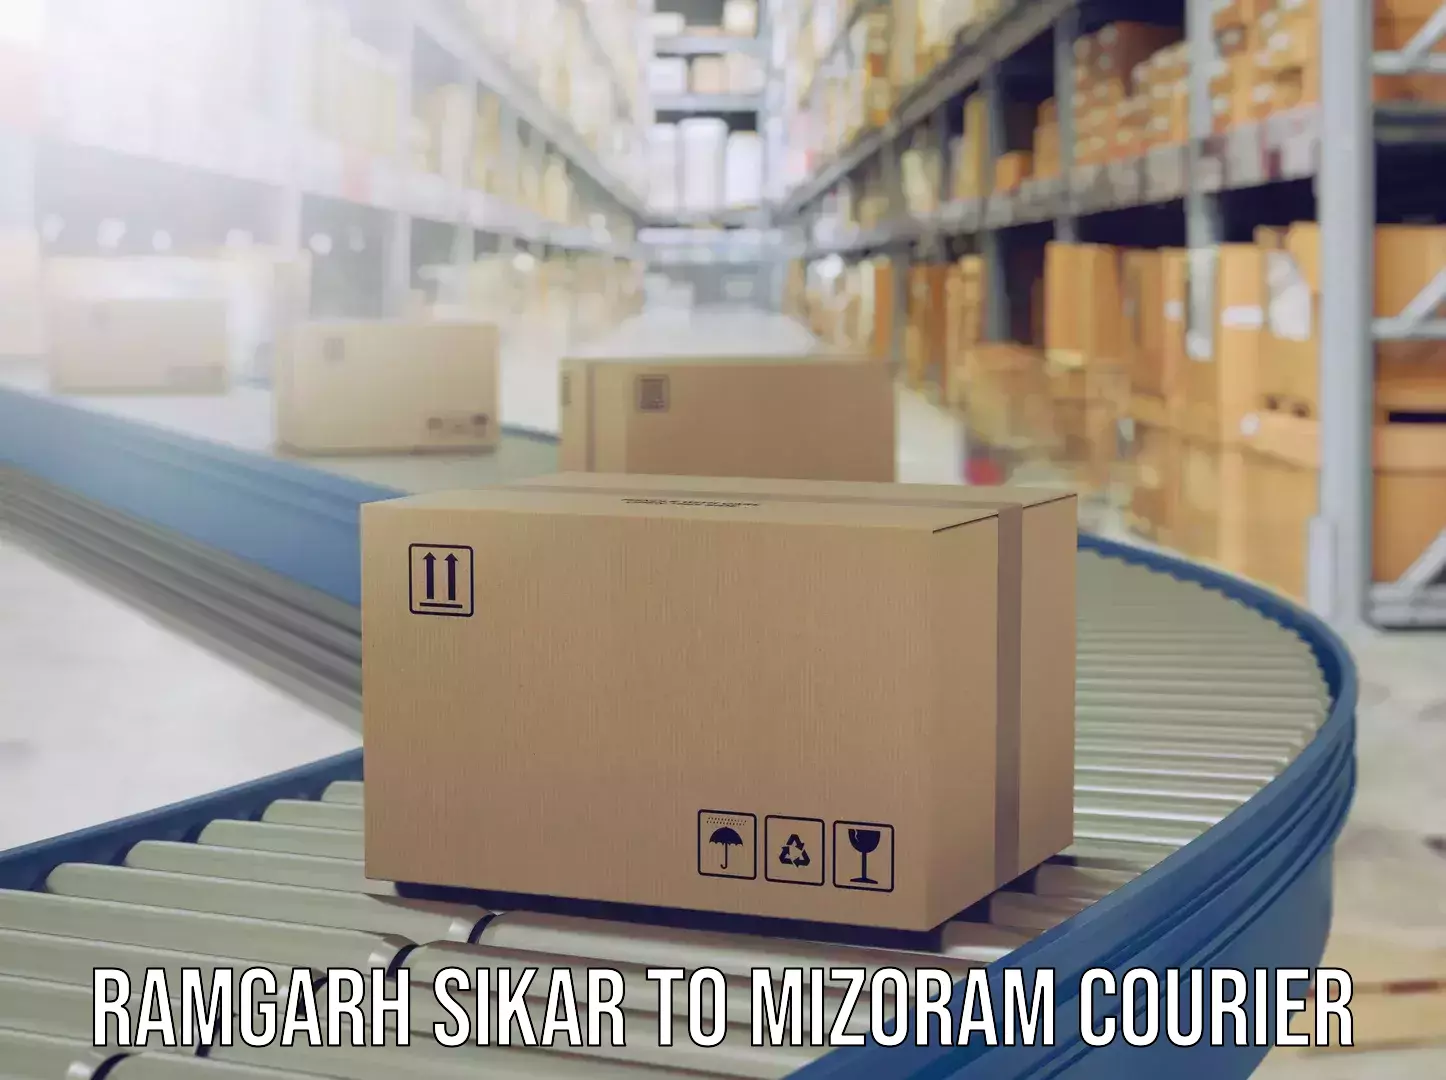 Door-to-door baggage service Ramgarh Sikar to Siaha